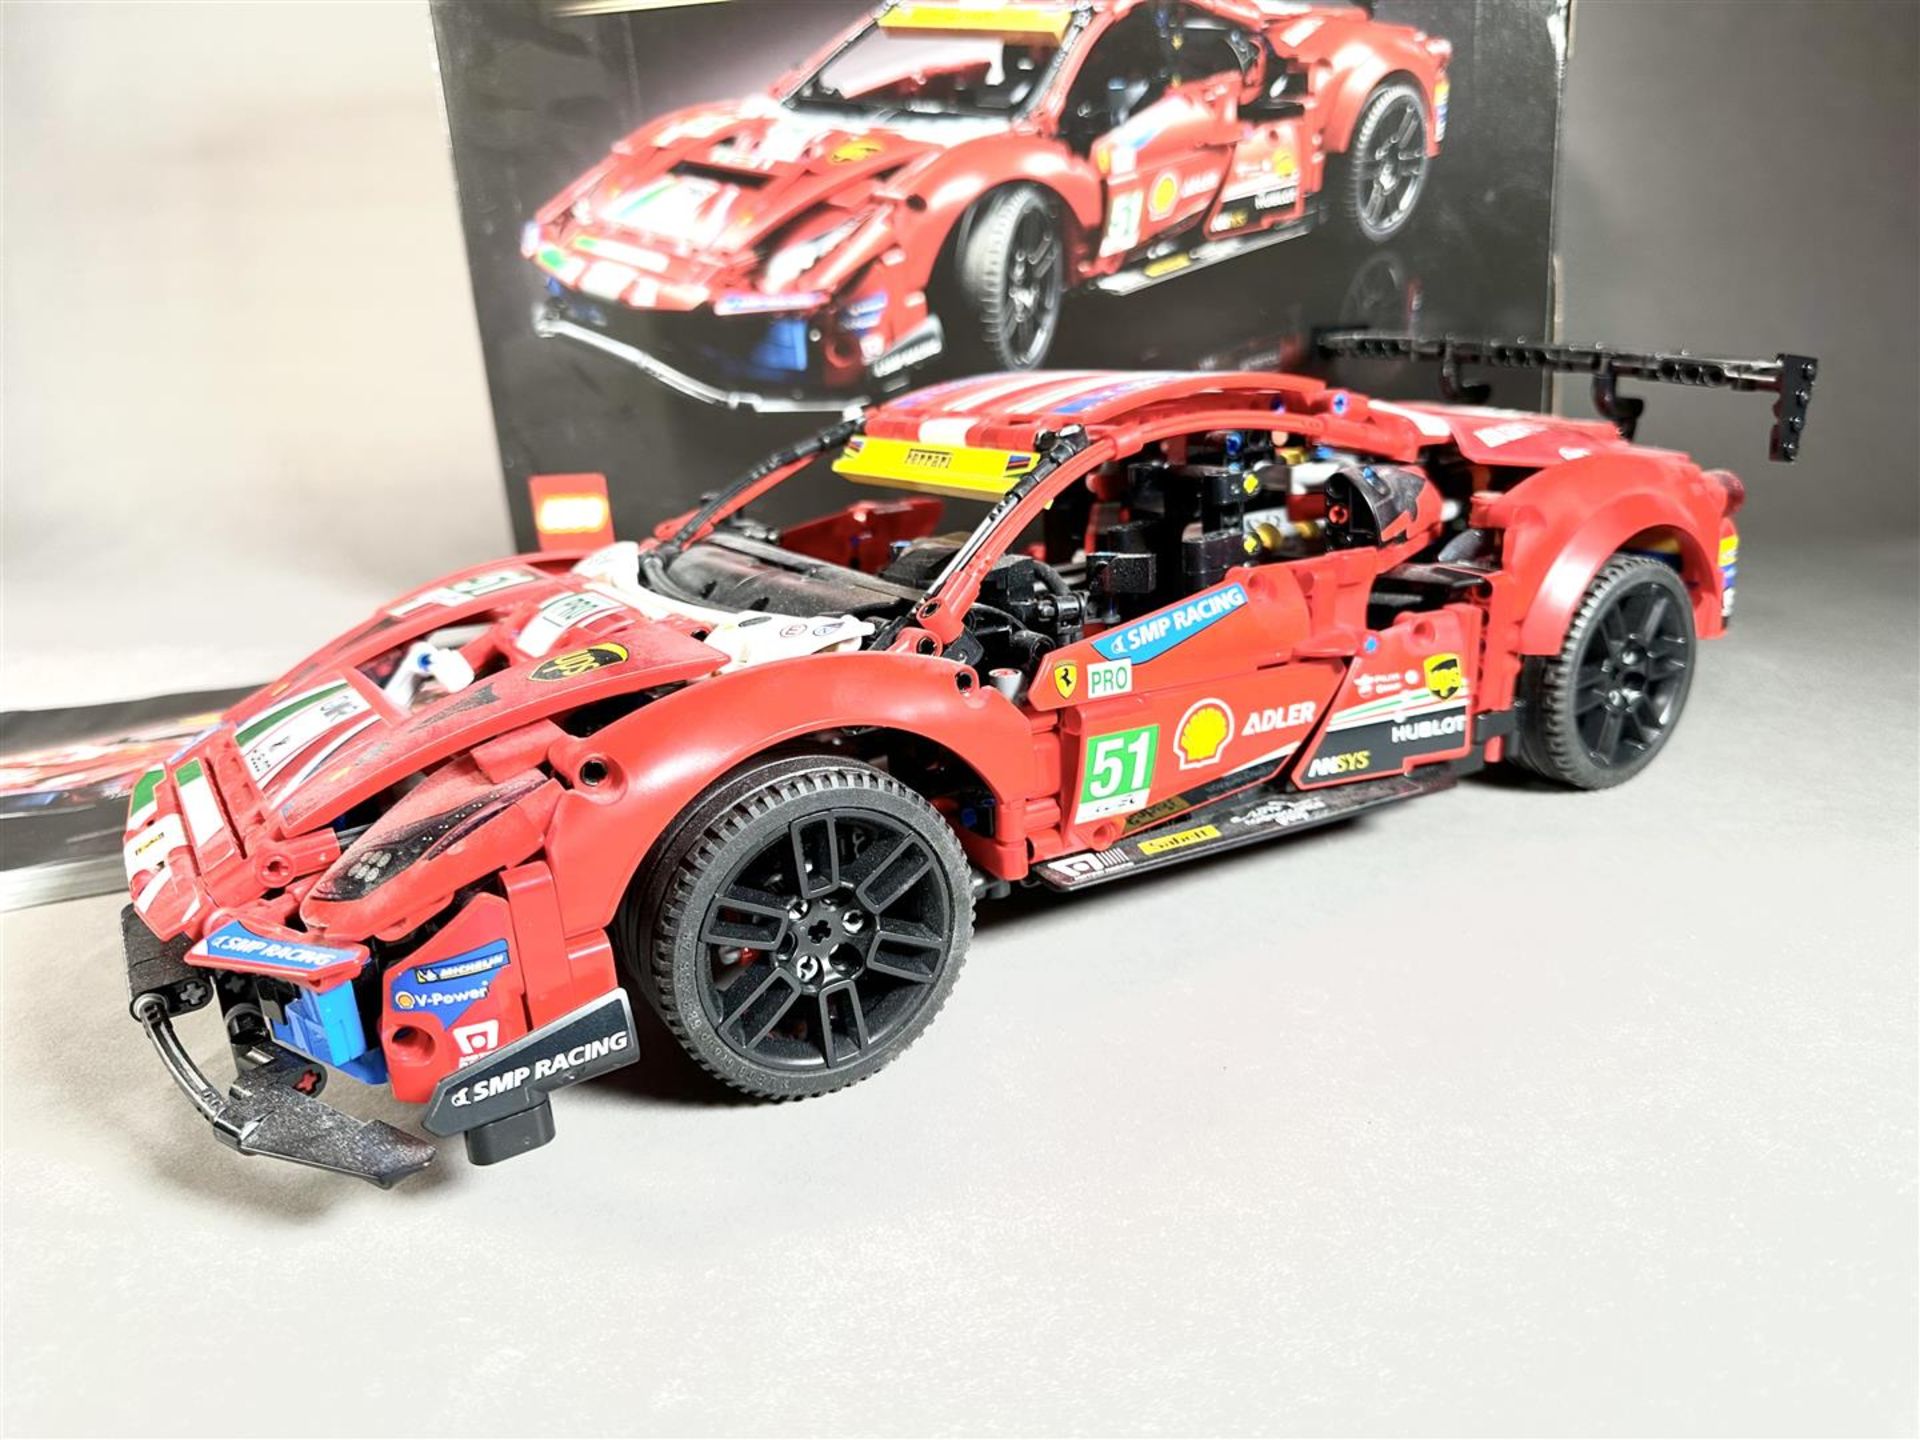 Lego Technic Ferrari 488 GTE AF Corse #51 42125. - Image 2 of 2